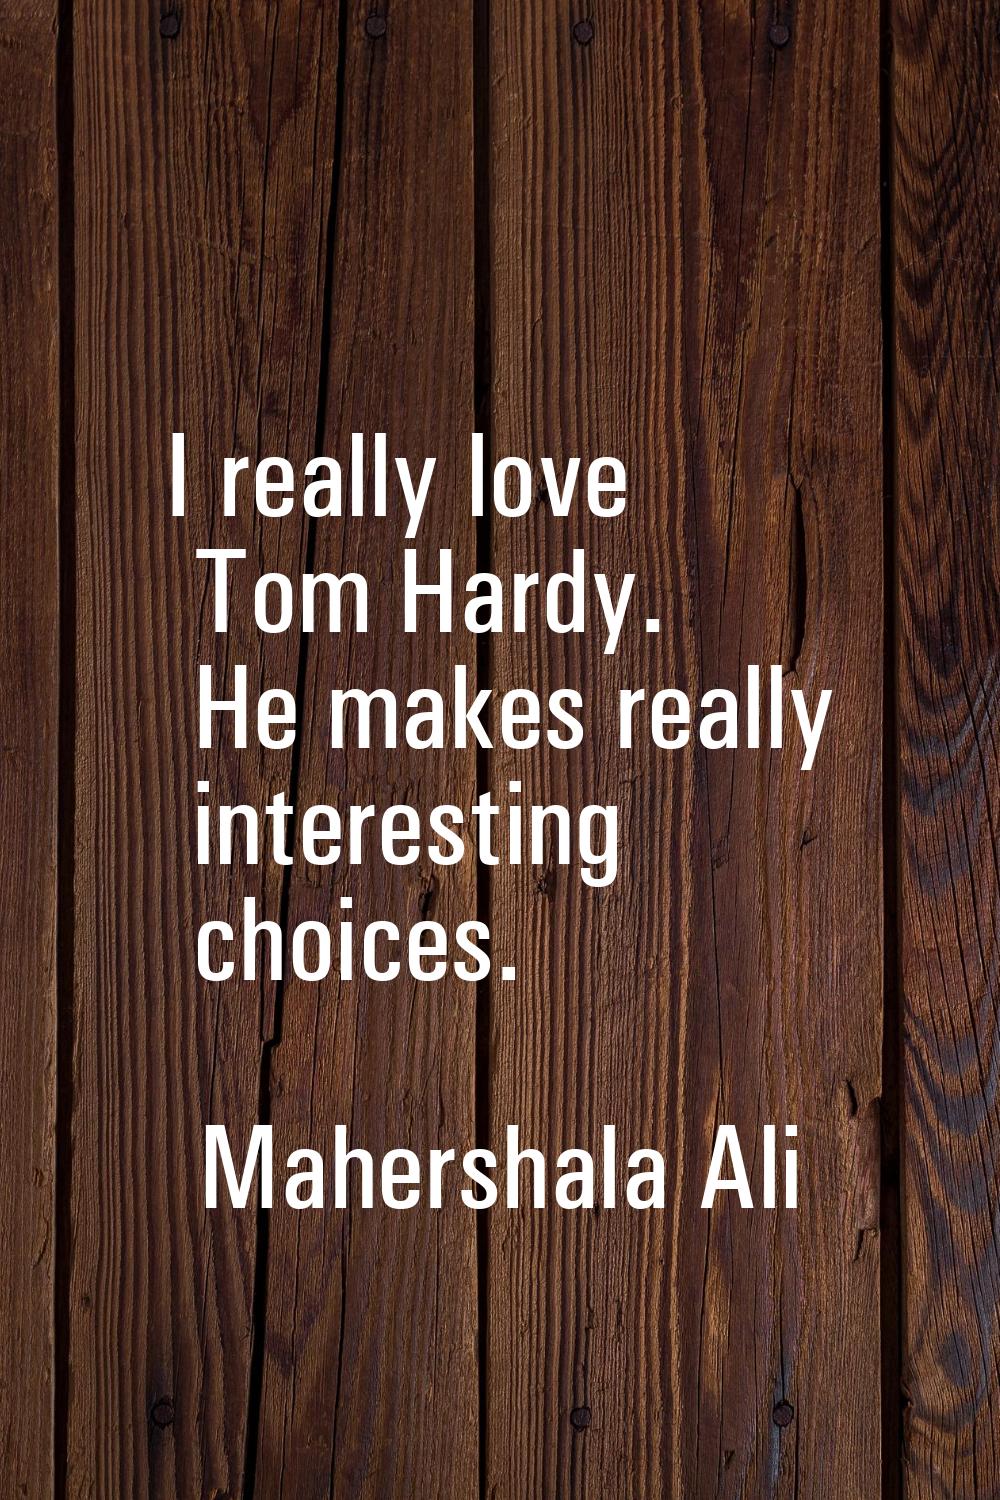 I really love Tom Hardy. He makes really interesting choices.